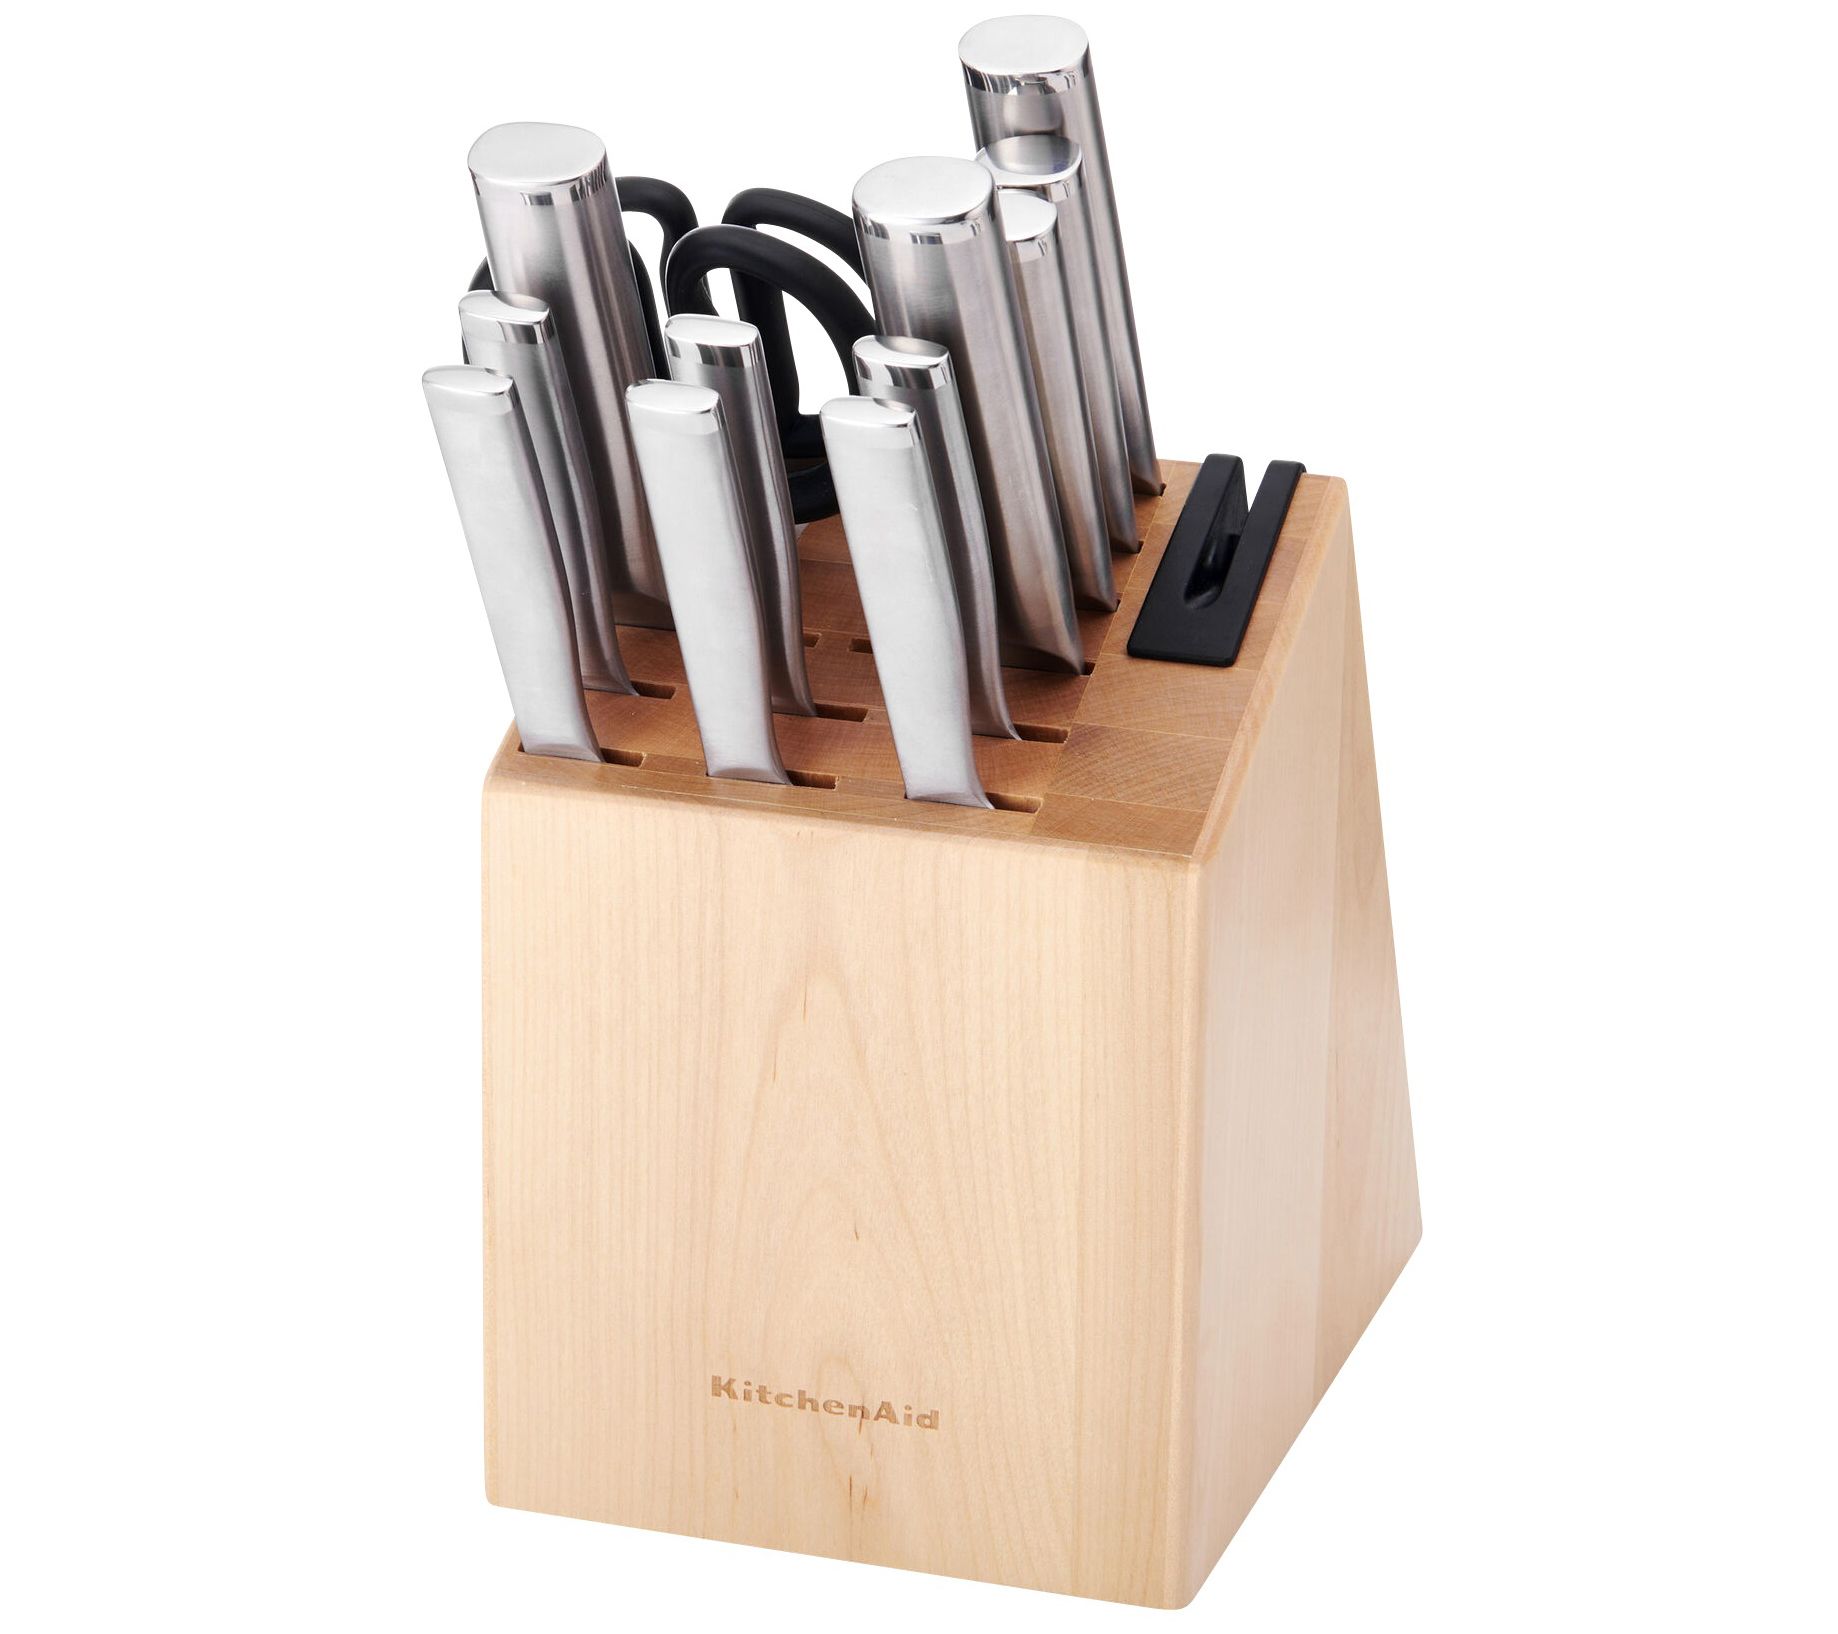 KitchenAid Gourmet 4-Piece Stainless Steel Steak Knife Set